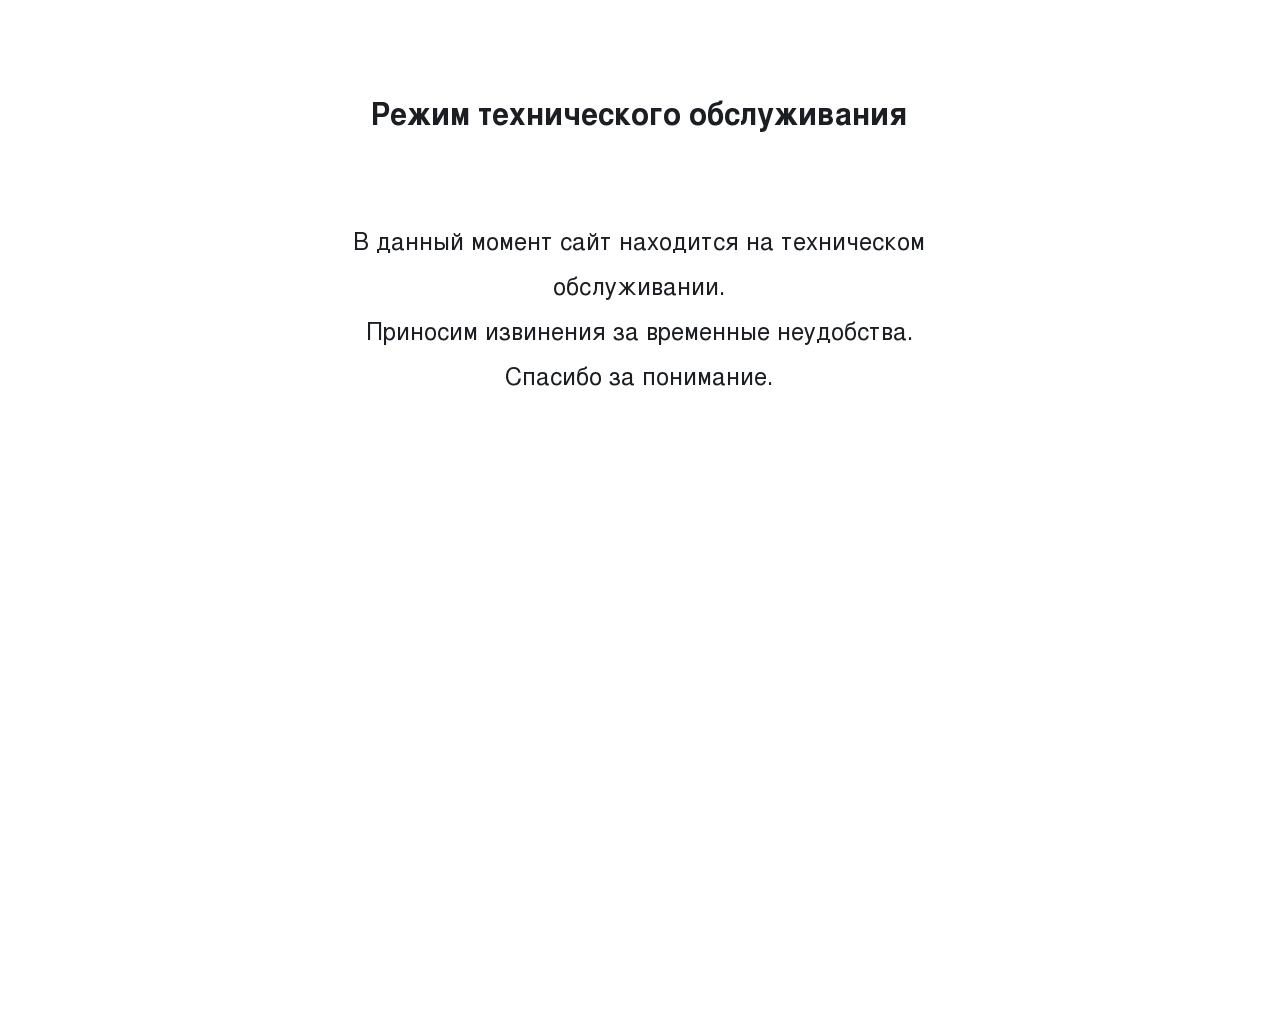 Изображение сайта amberpresent.ru в разрешении 1280x1024